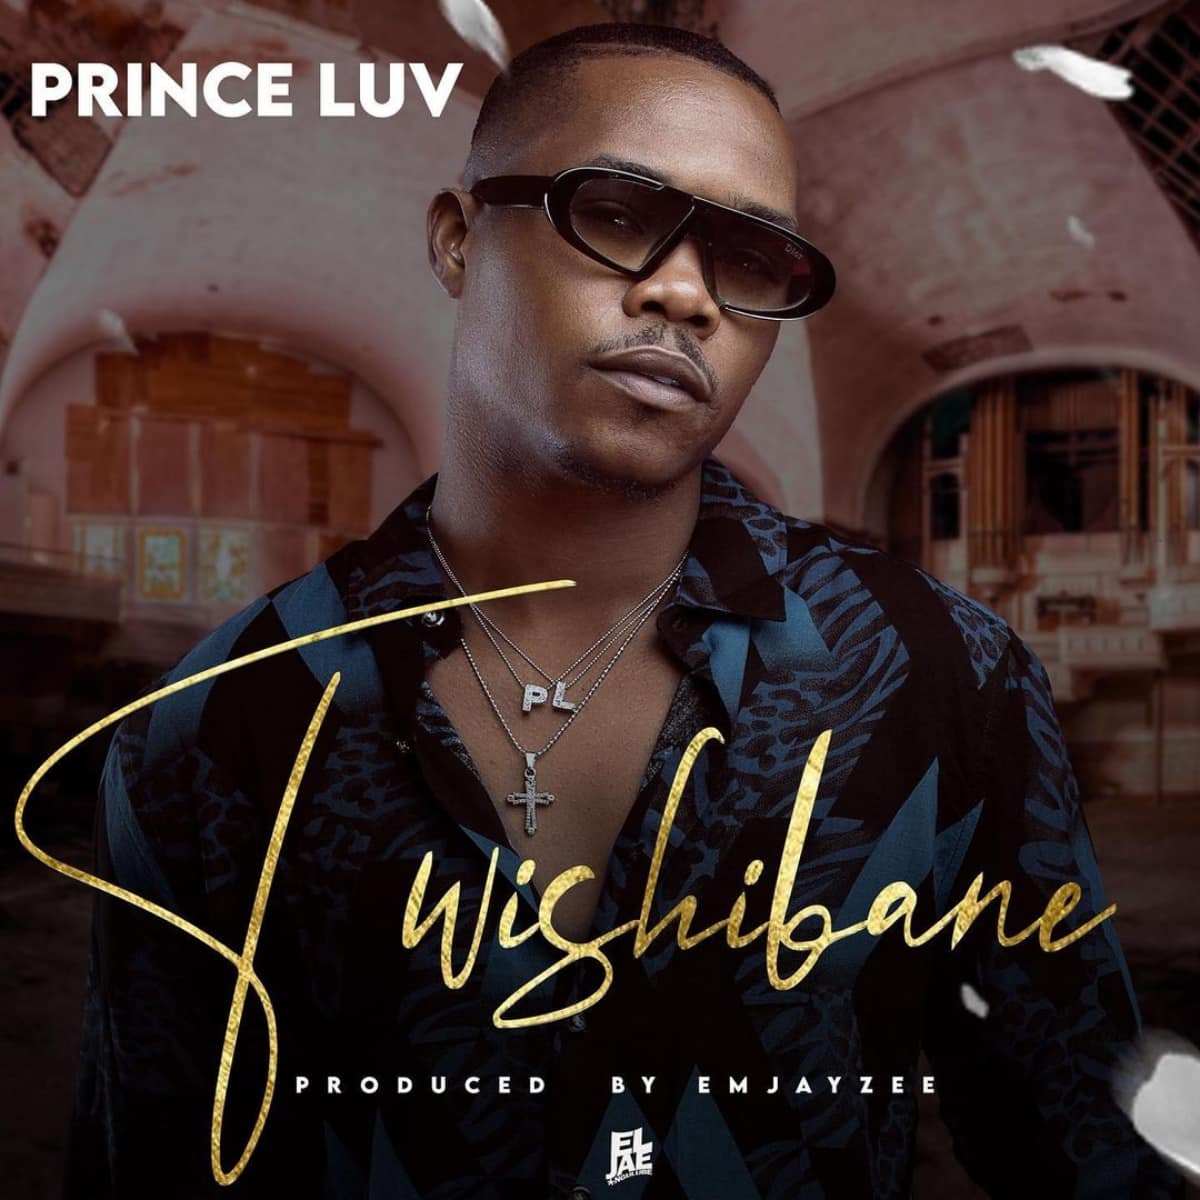 DOWNLOAD: Prince Luv – “Twishibane” Mp3